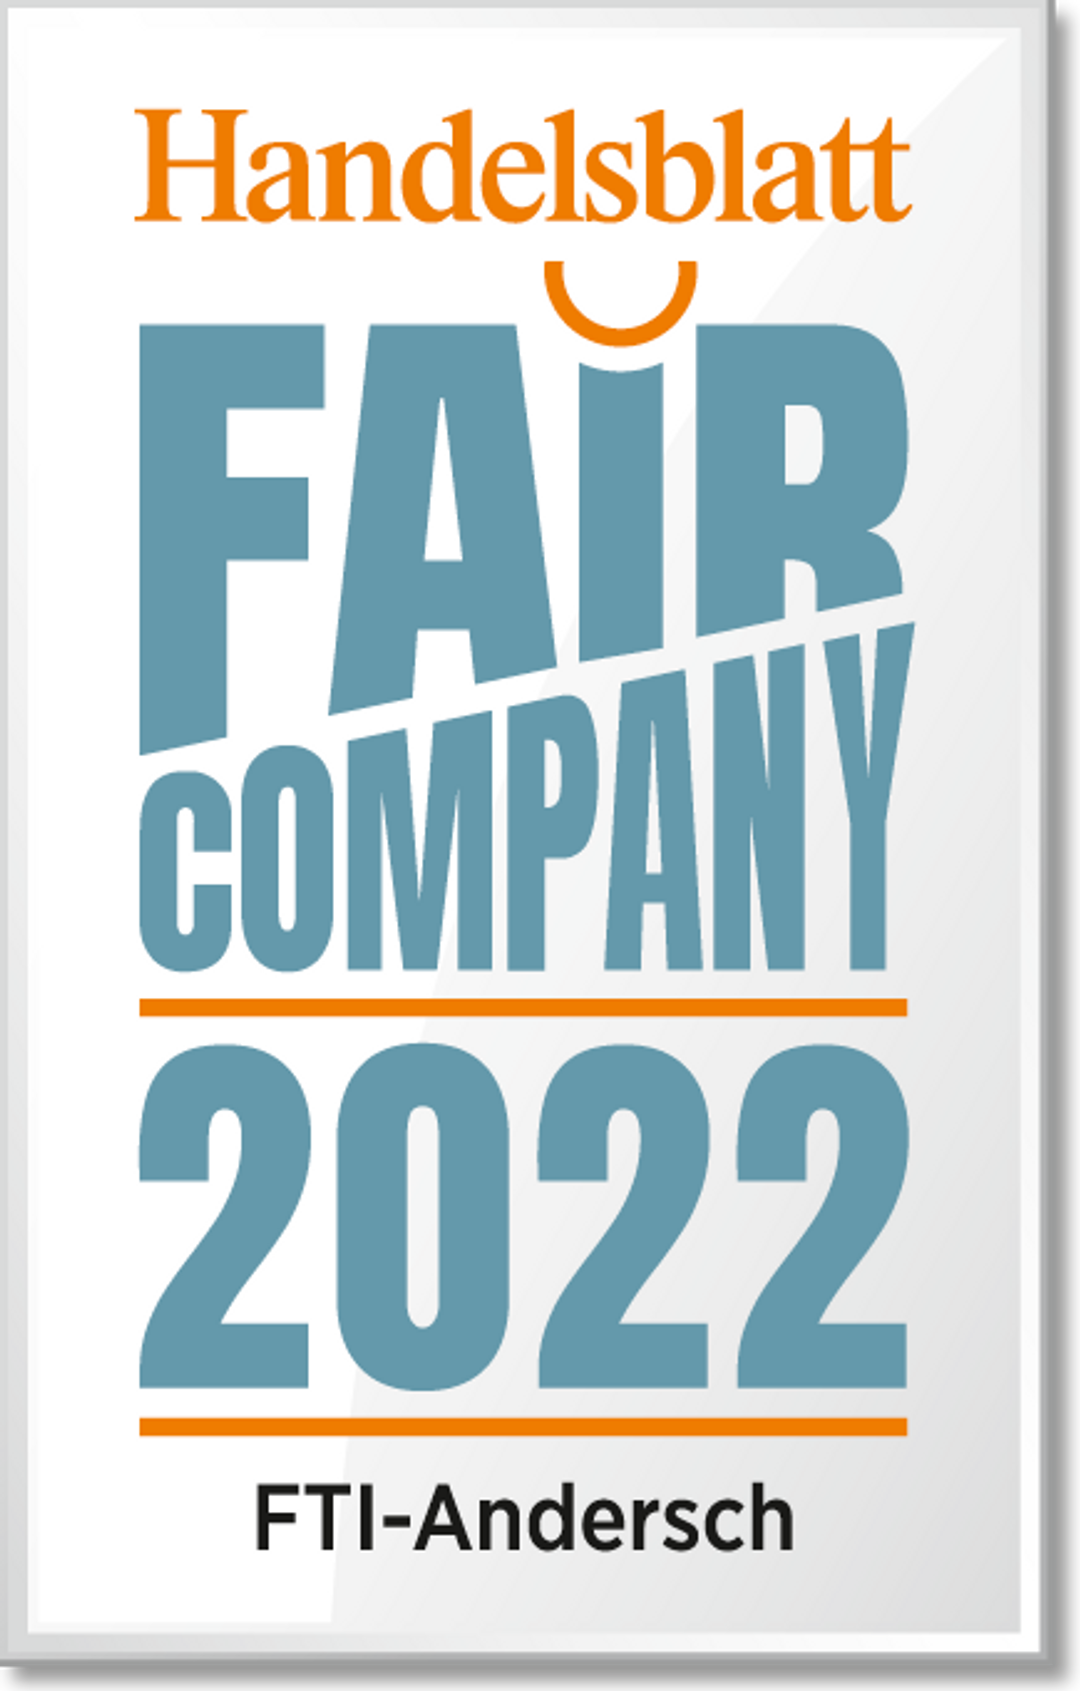 Fair Company Logo